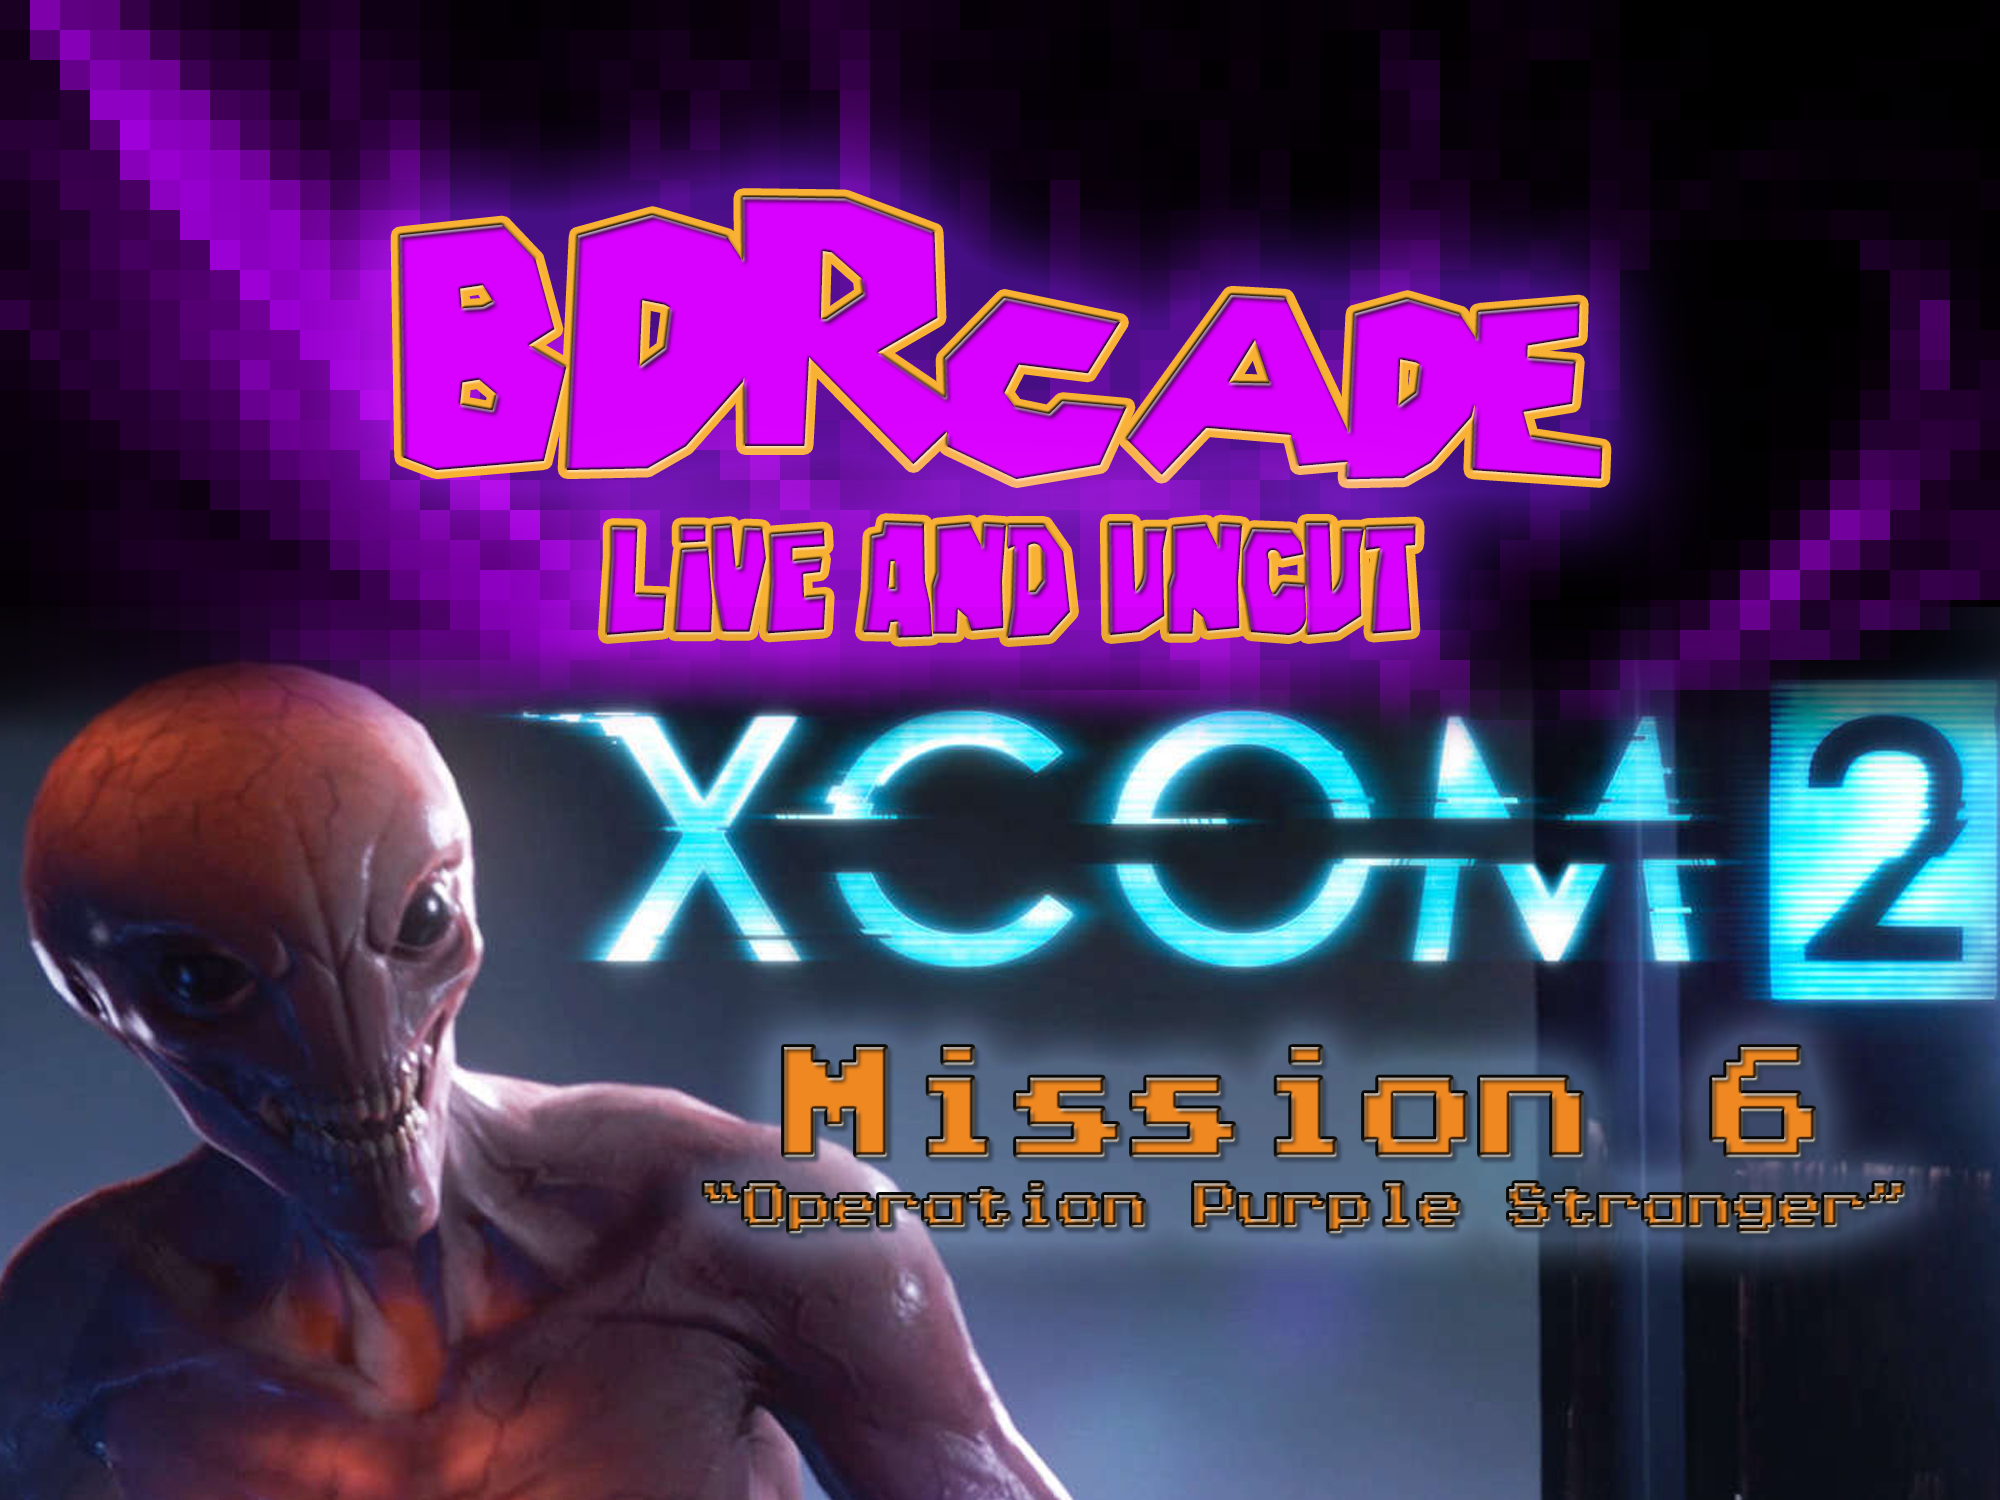 XCOM 2 – Mission 6 : “Operation Purple Stranger” – A BDRcade Live Stream